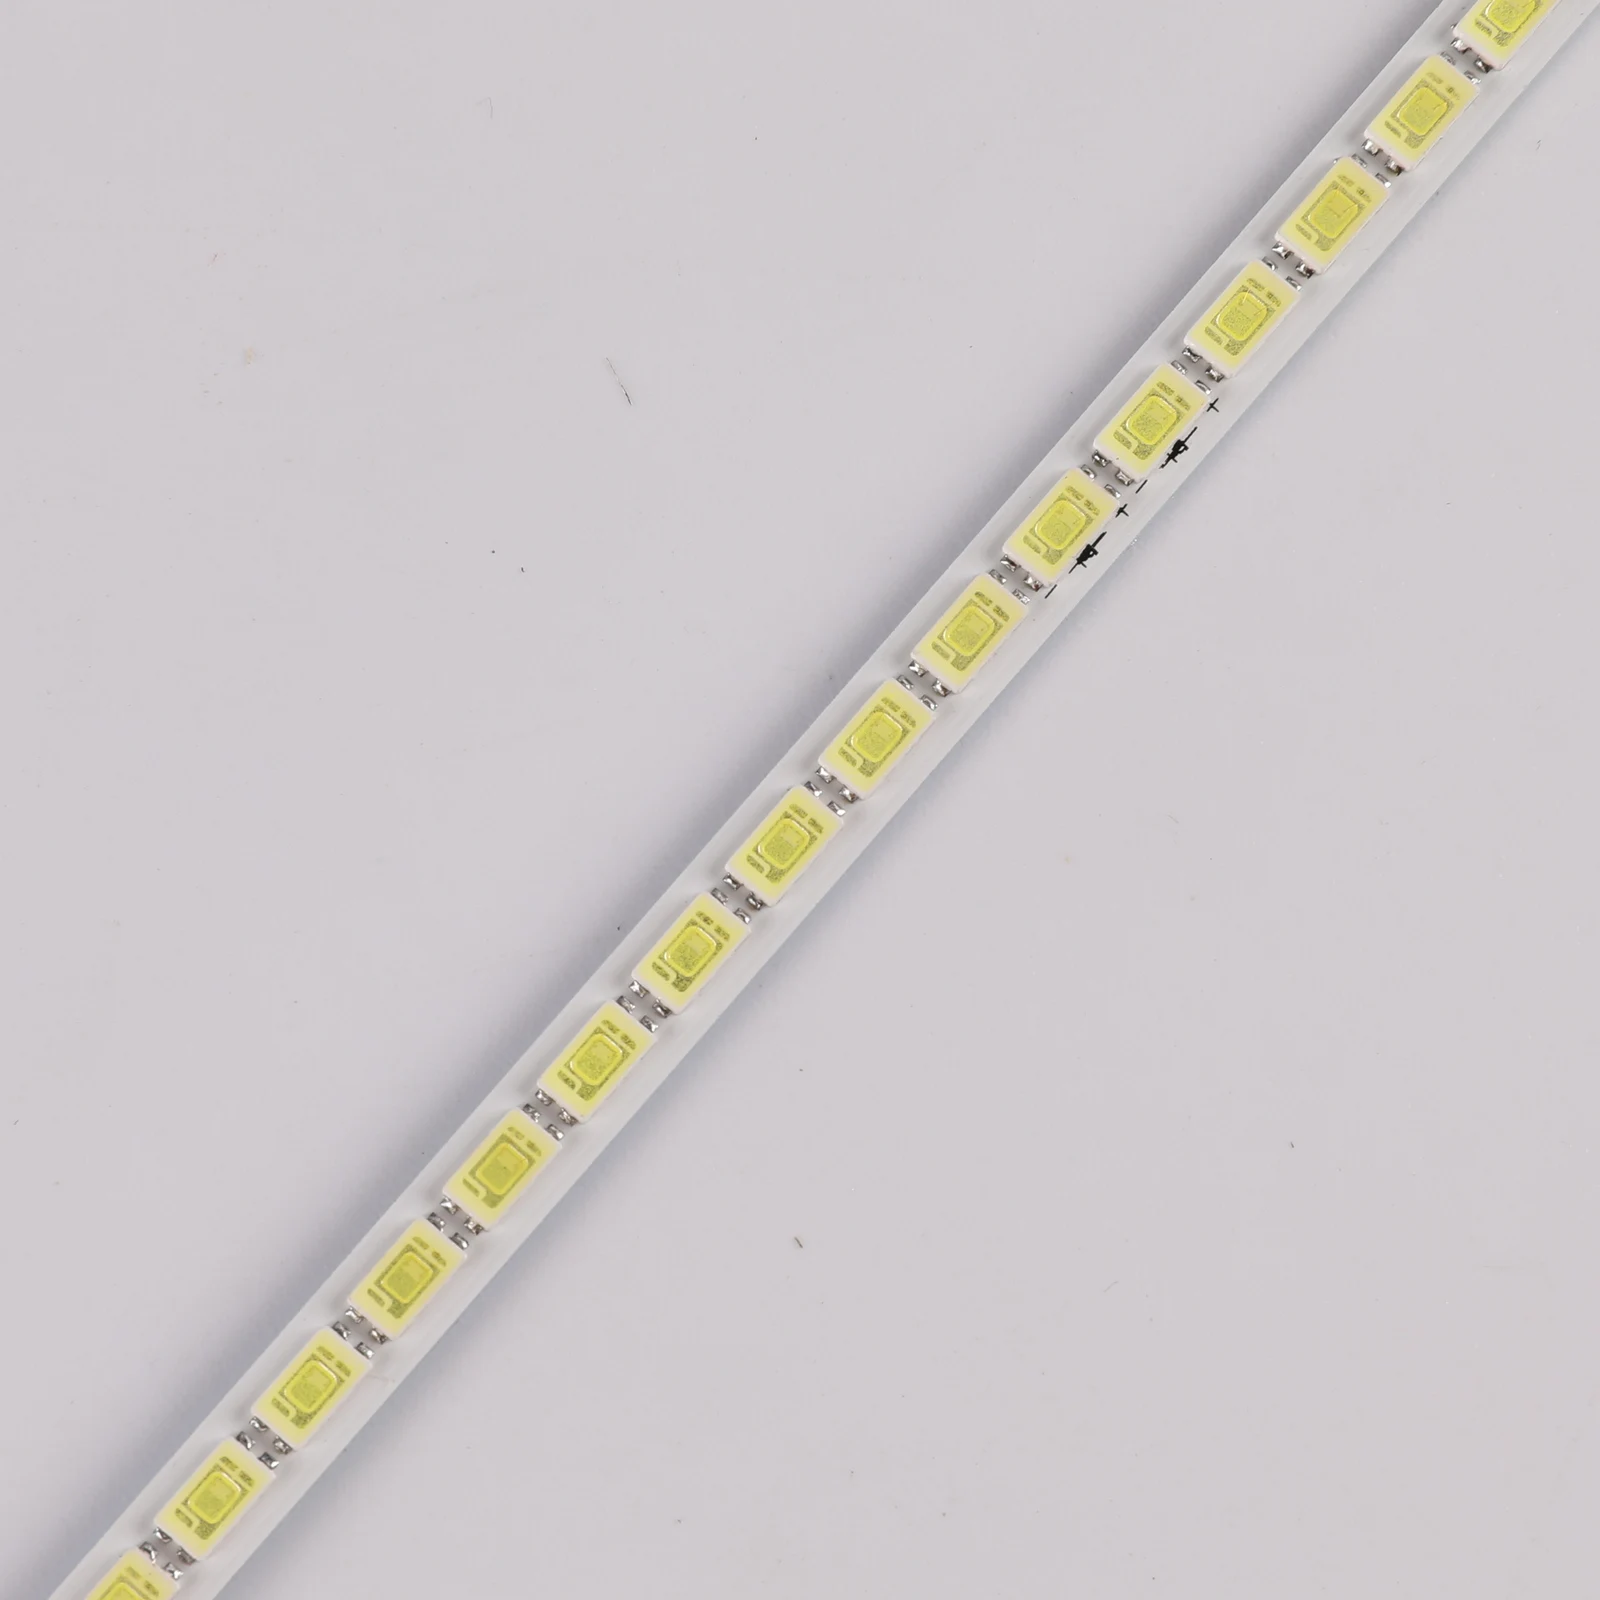 

NEW LED Backlight strip 60 lamp For TOSHIBA 32"TV SLED 32KL933R 2011SGS32 5630N2 60 LED32HS11LJ64-03597A FW201281A0